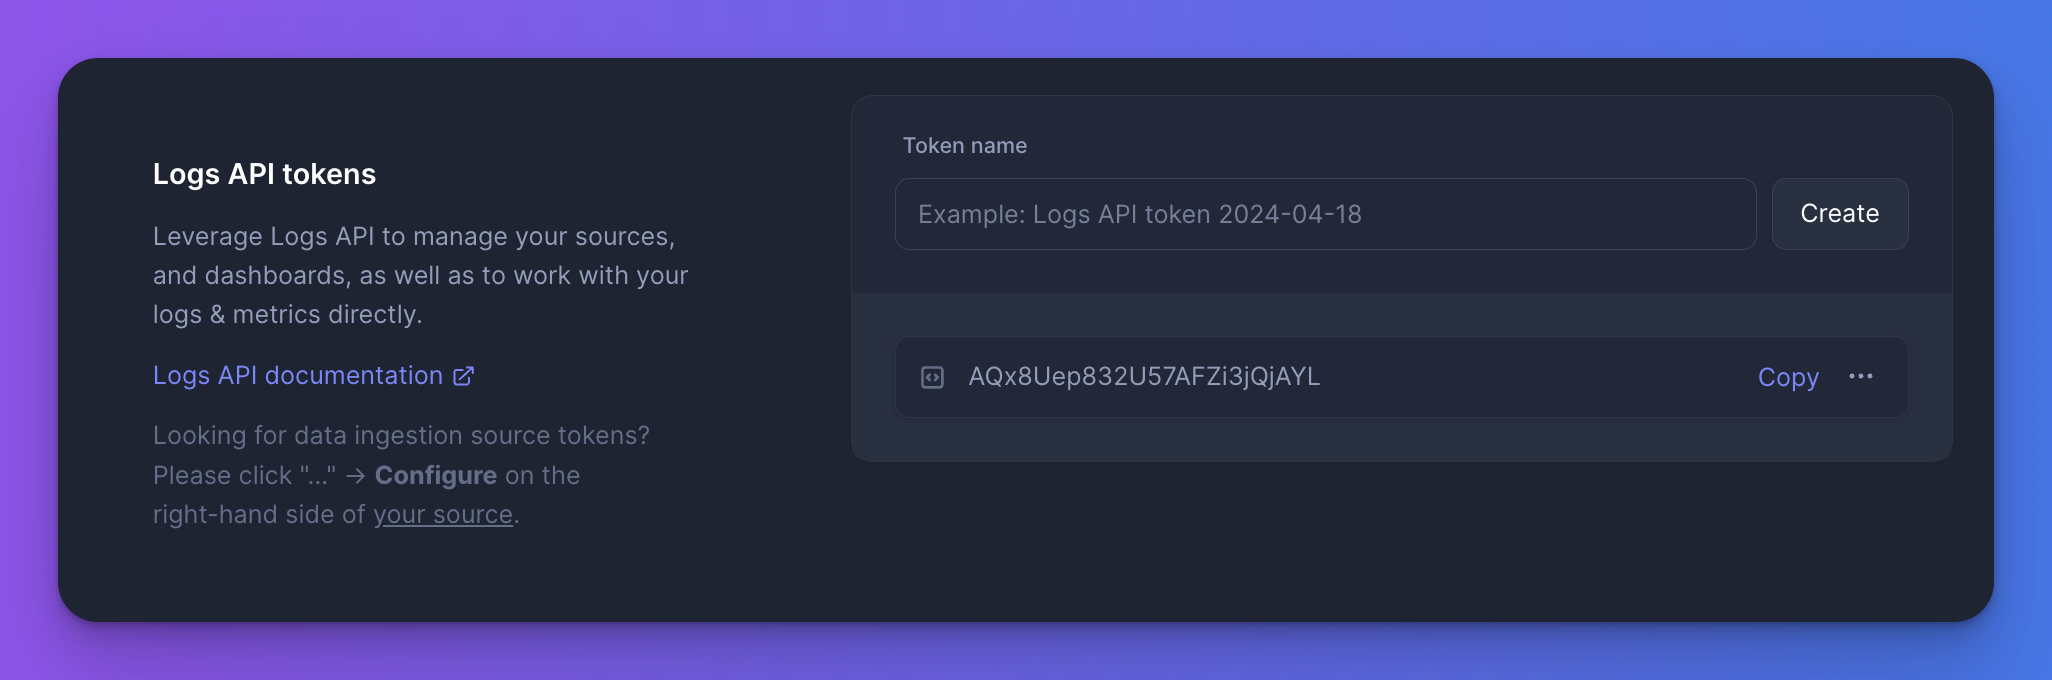 Screenshot of Logs API tokens